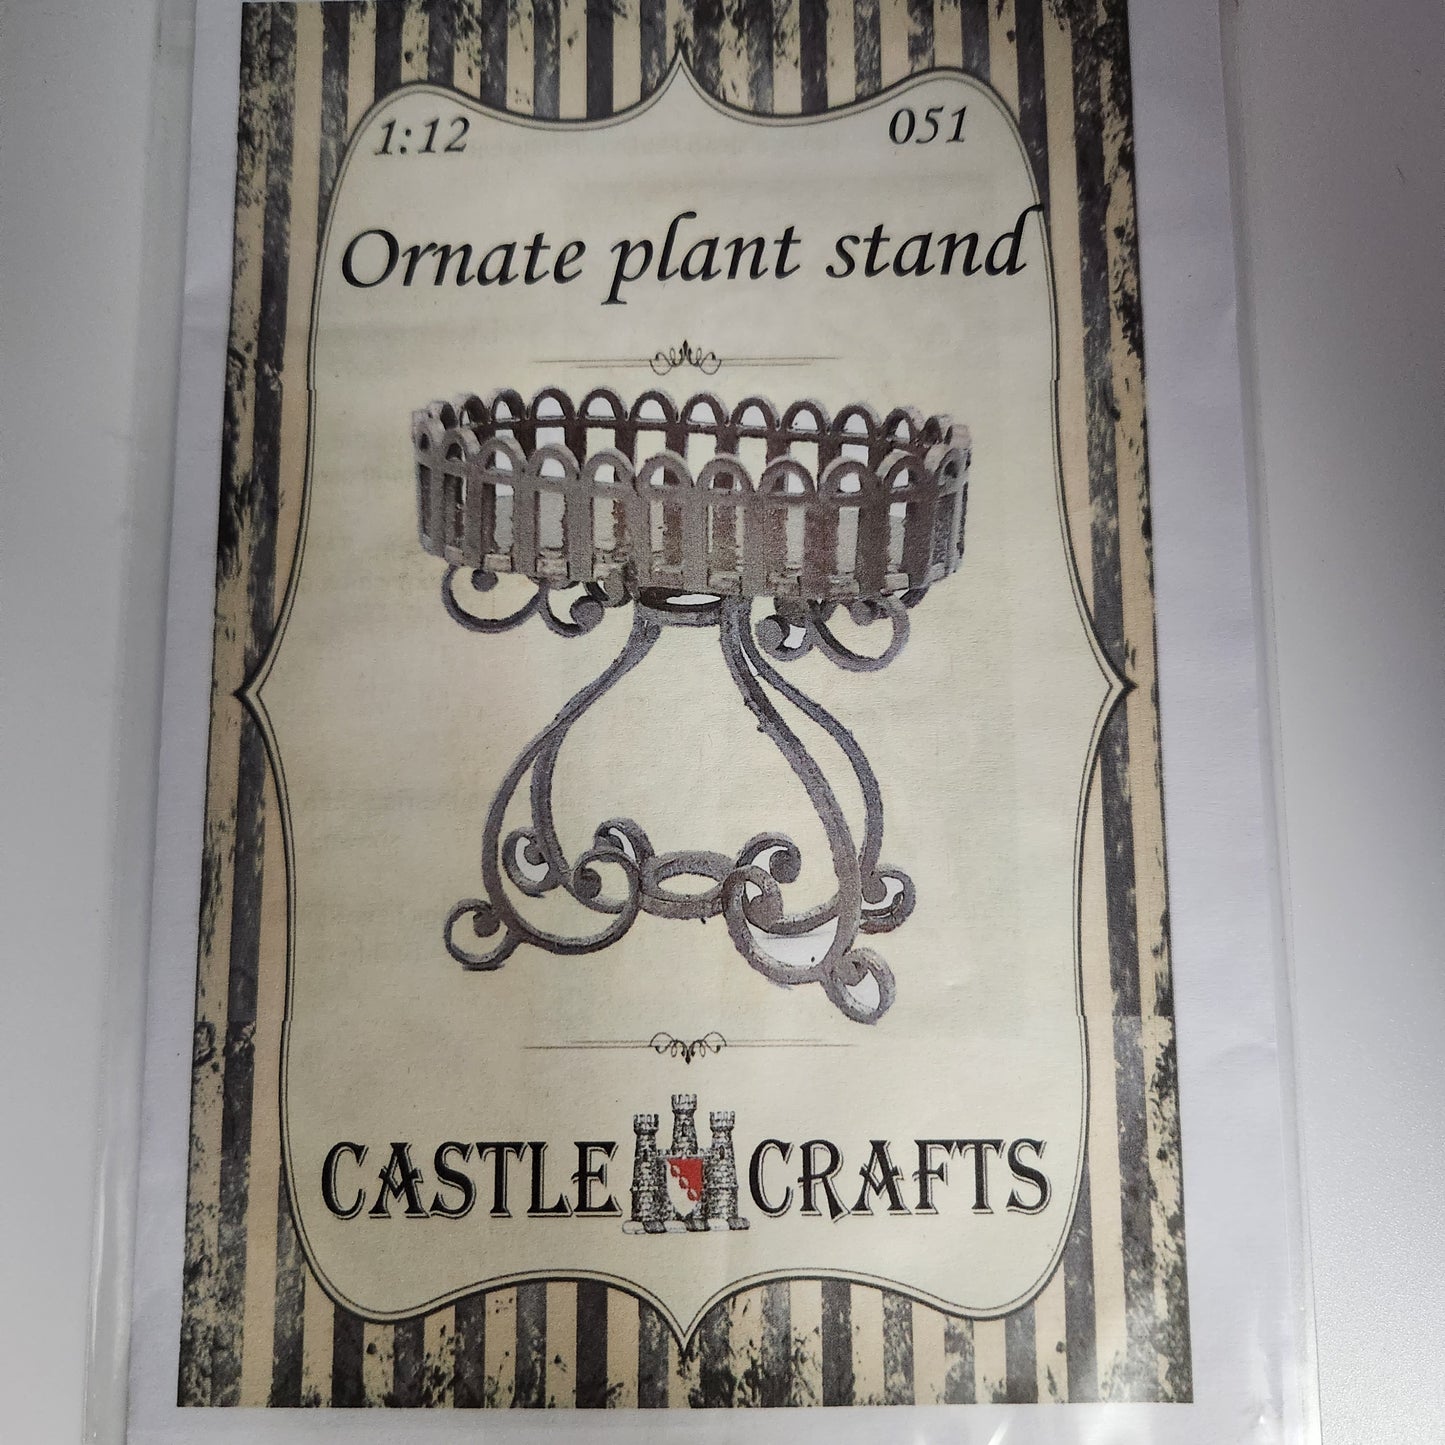 Kit - Ornate Plant Stand #051